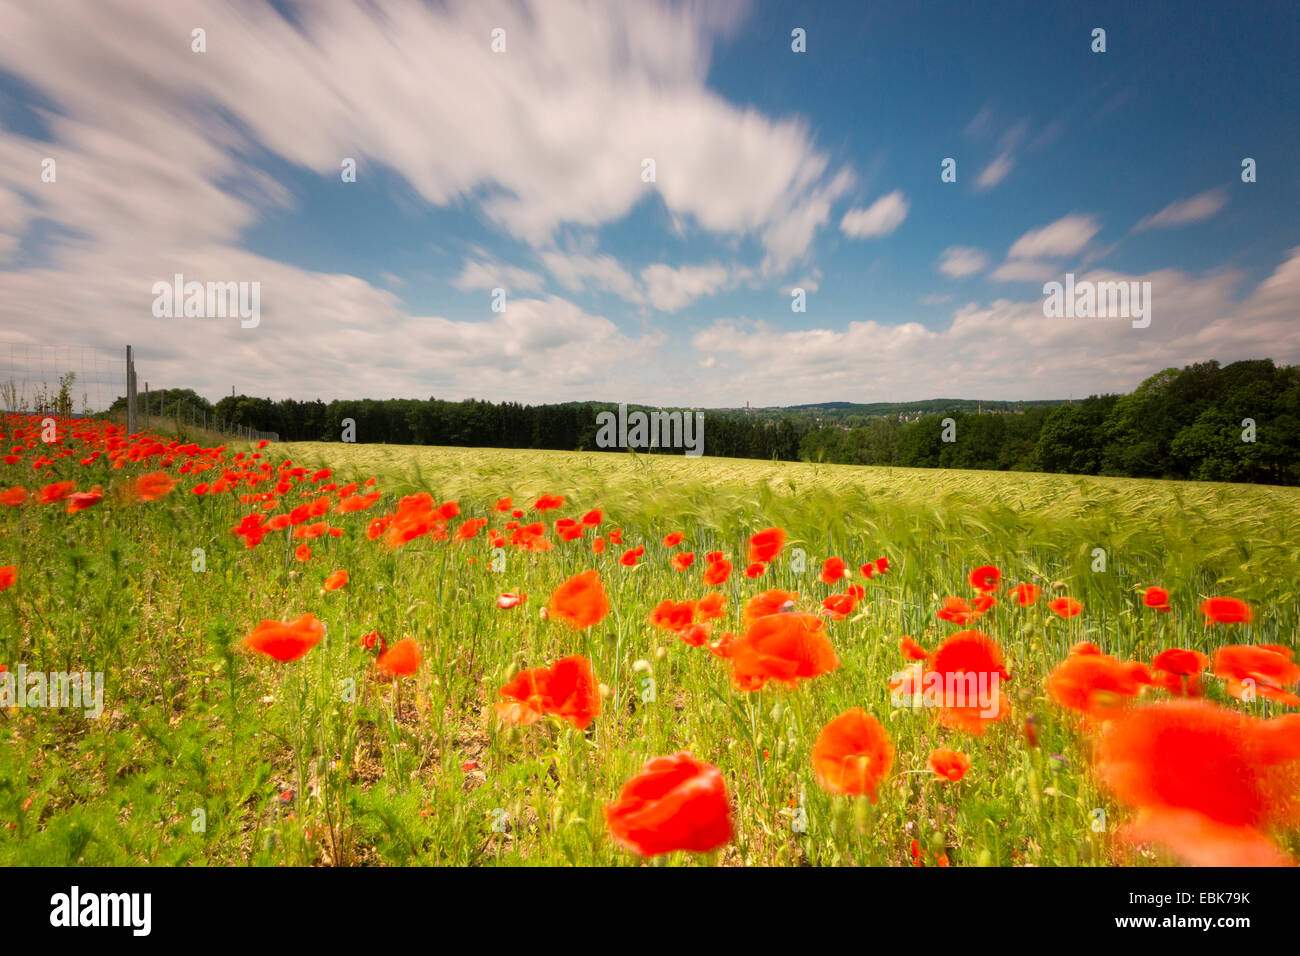 Common poppy, Corn poppy, Red poppy (Papaver rhoeas), poppy in a field boundary of a cornfield in wind, Germany, Saxony Stock Photo